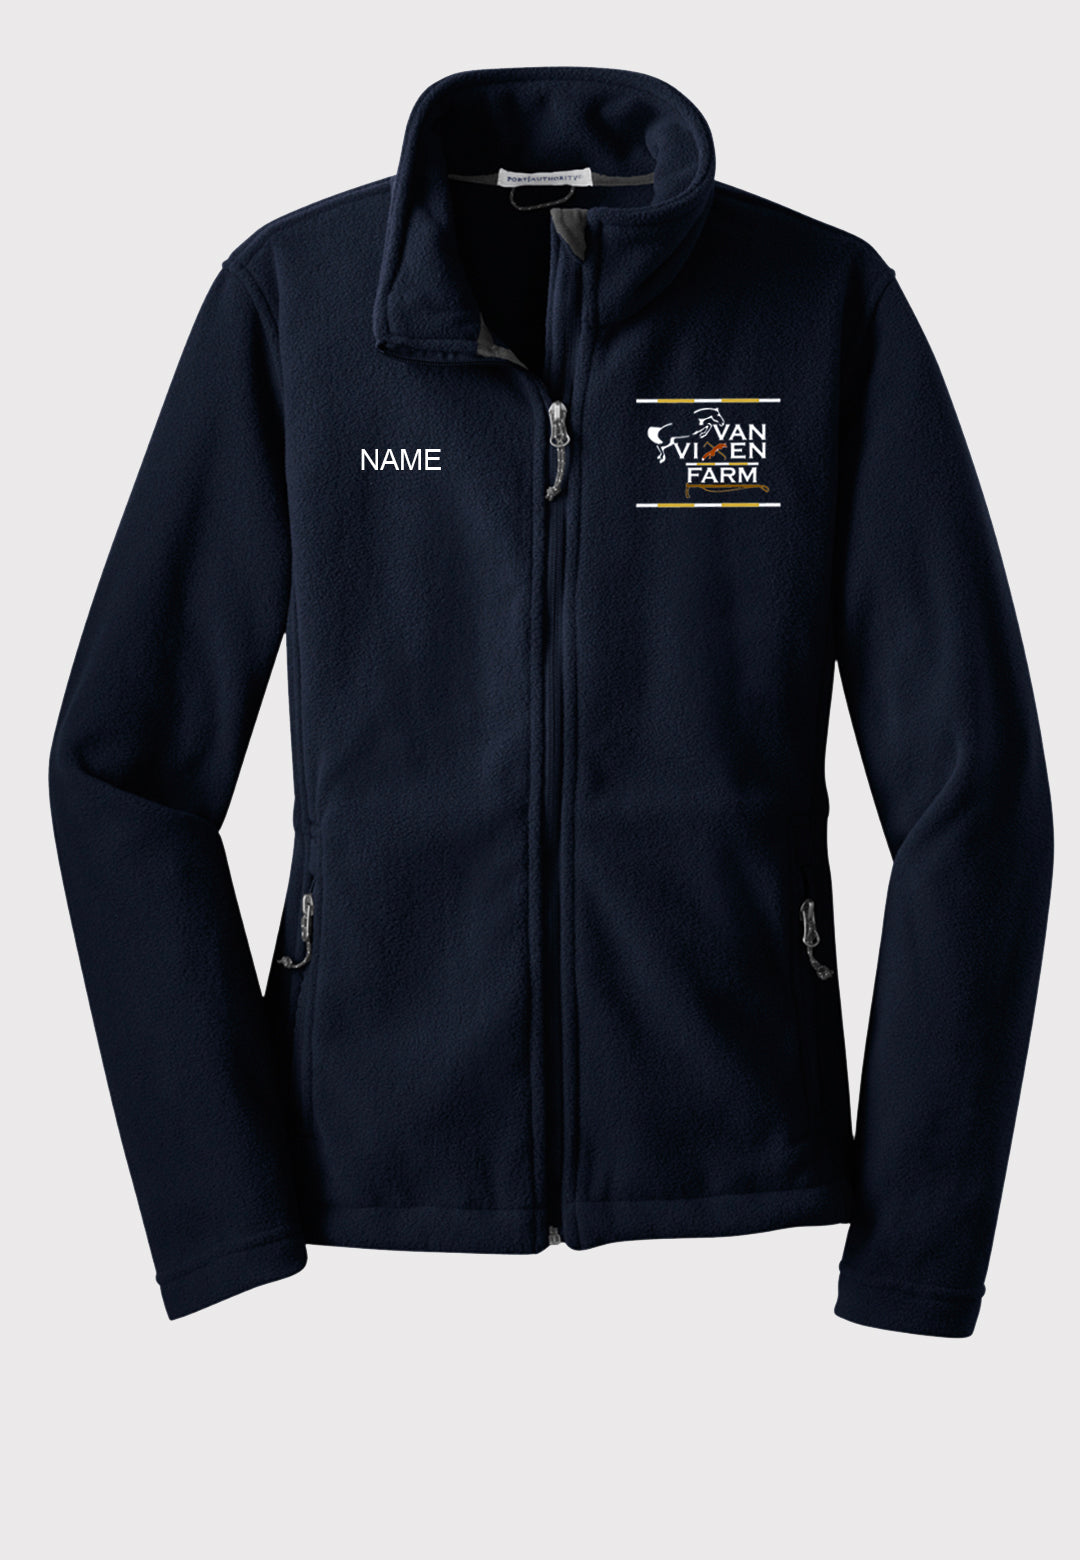 Van Vixen Farm Port Authority® Value Fleece Jacket - Ladies + Youth Sizes